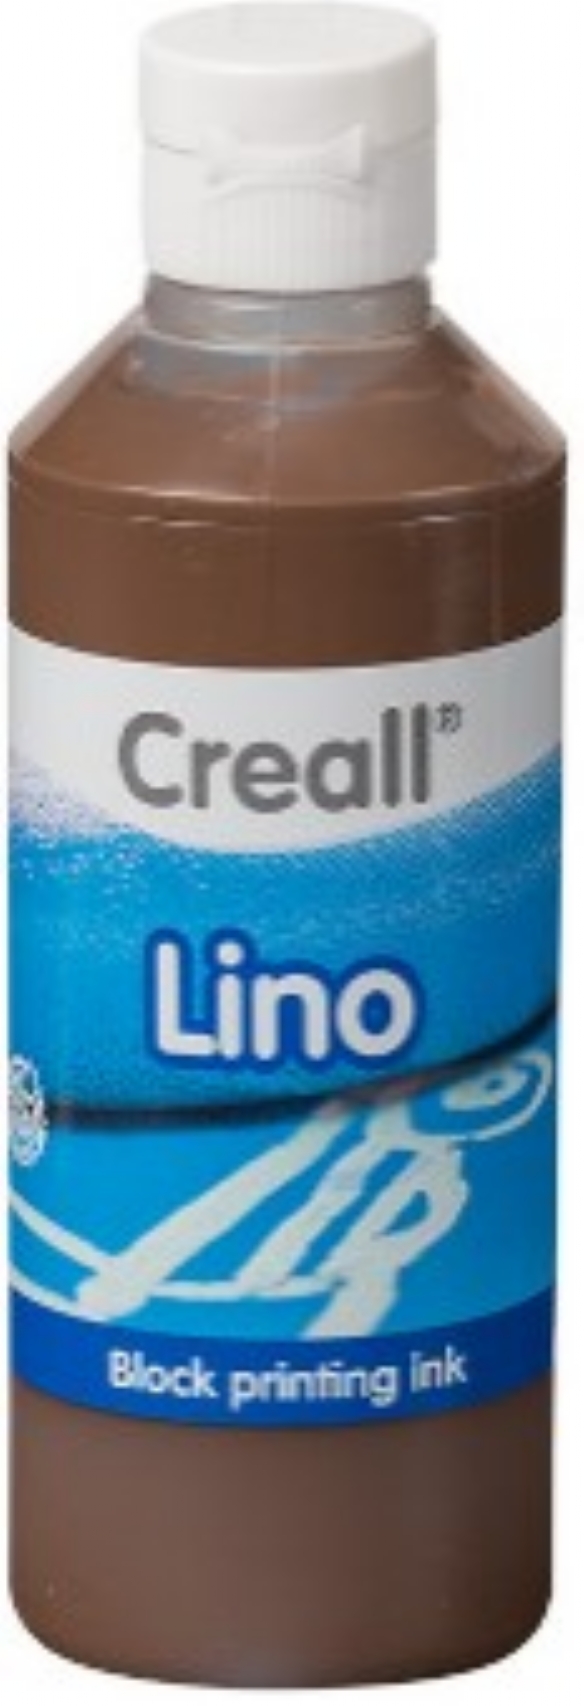 Creall-linoverf/blockprint verf, 250 ml, bruin kopen?